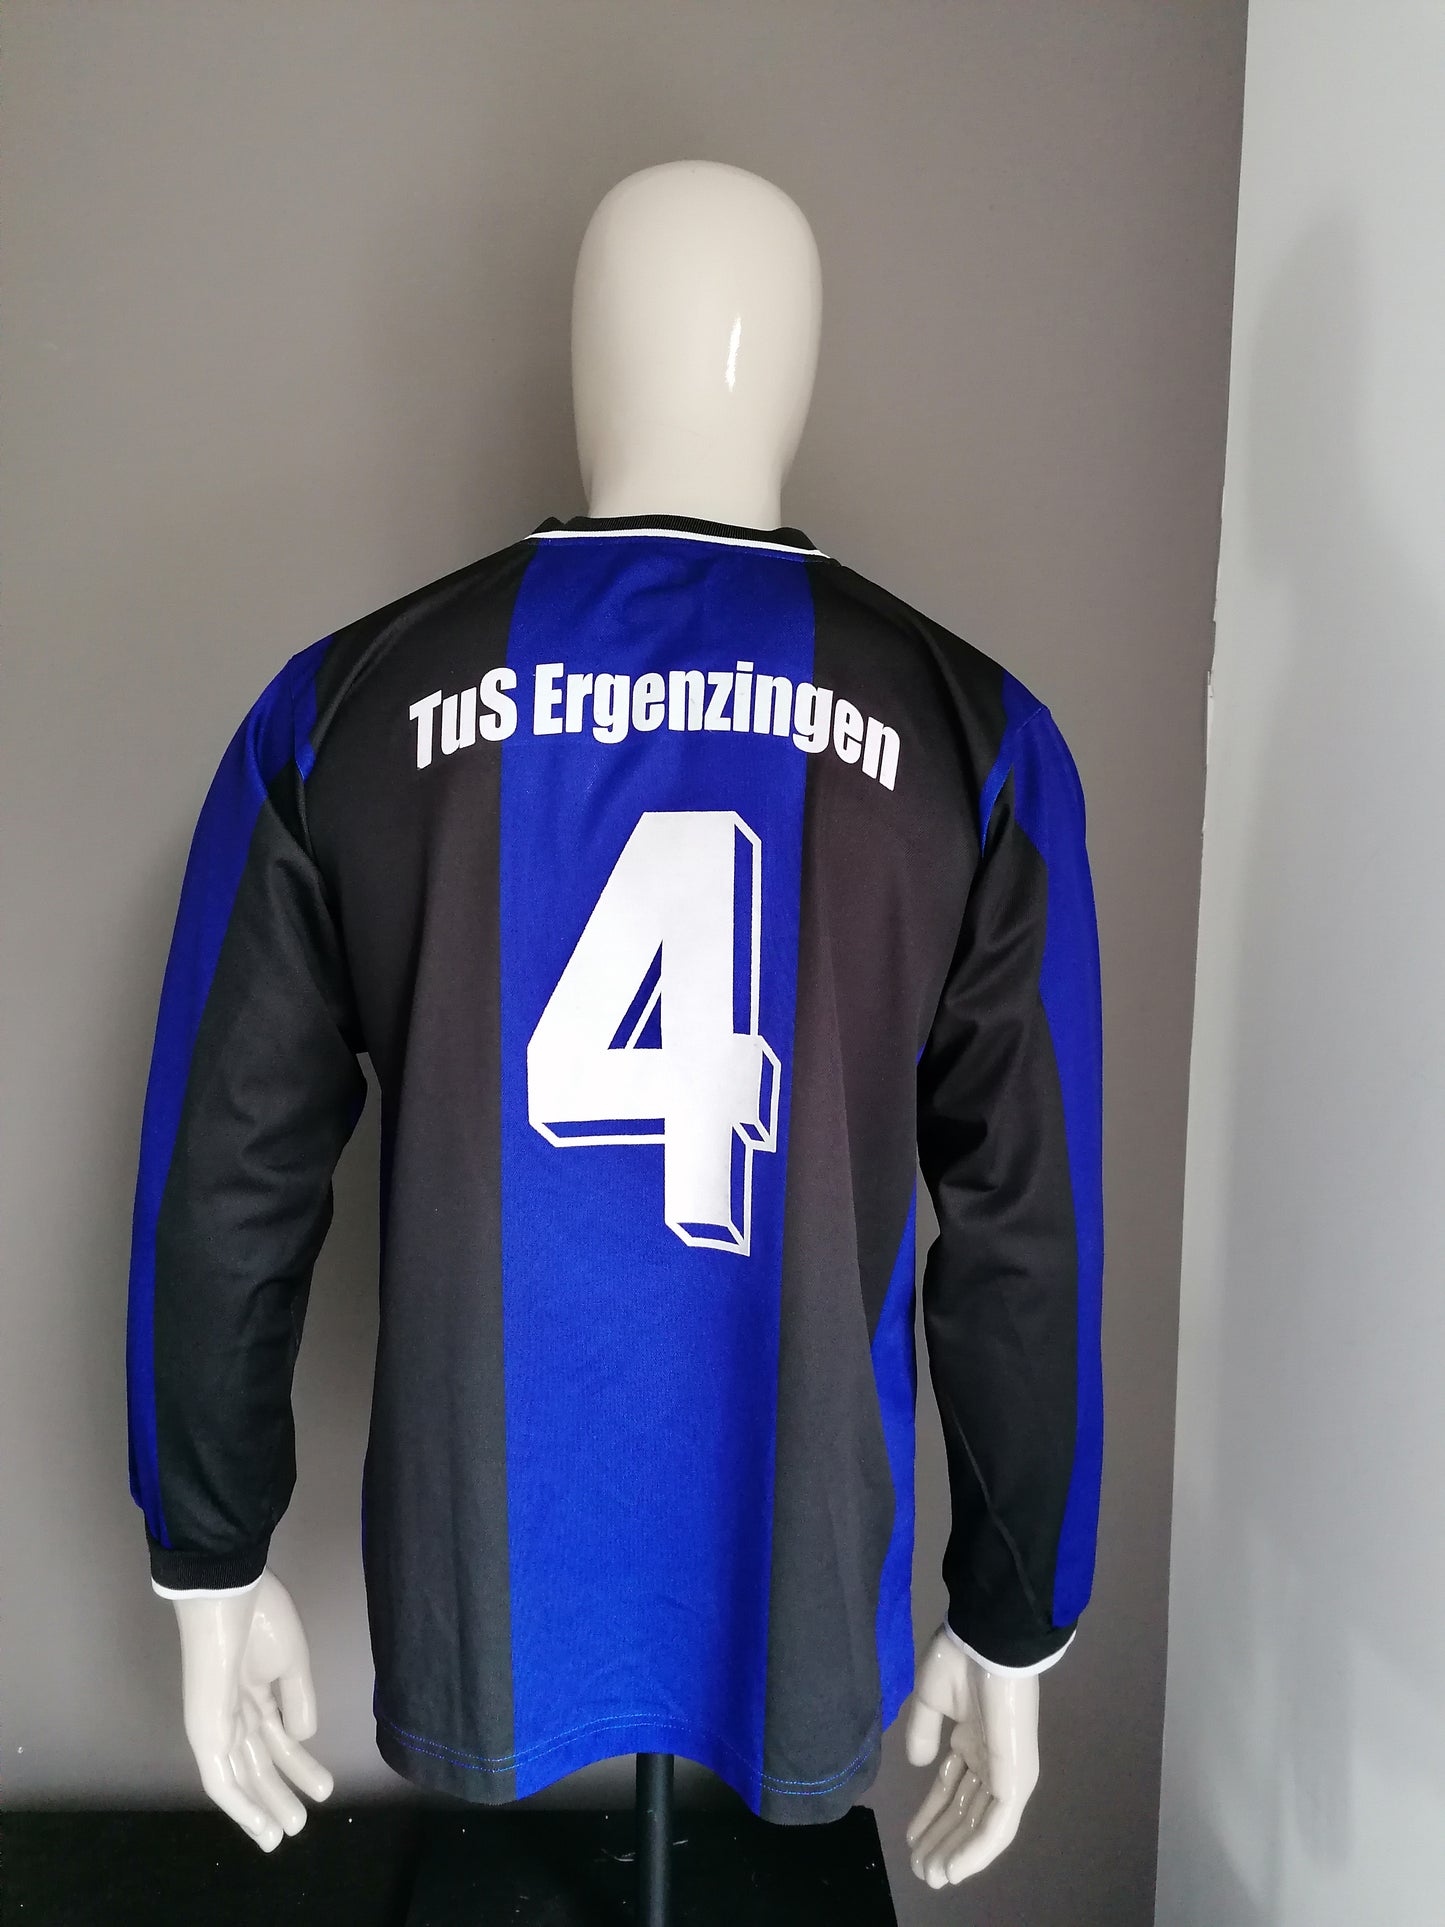 Nike Alemania "Tus Henginingen" Camisa de fútbol deportiva Mangas largas. Azul negro. Talla L.